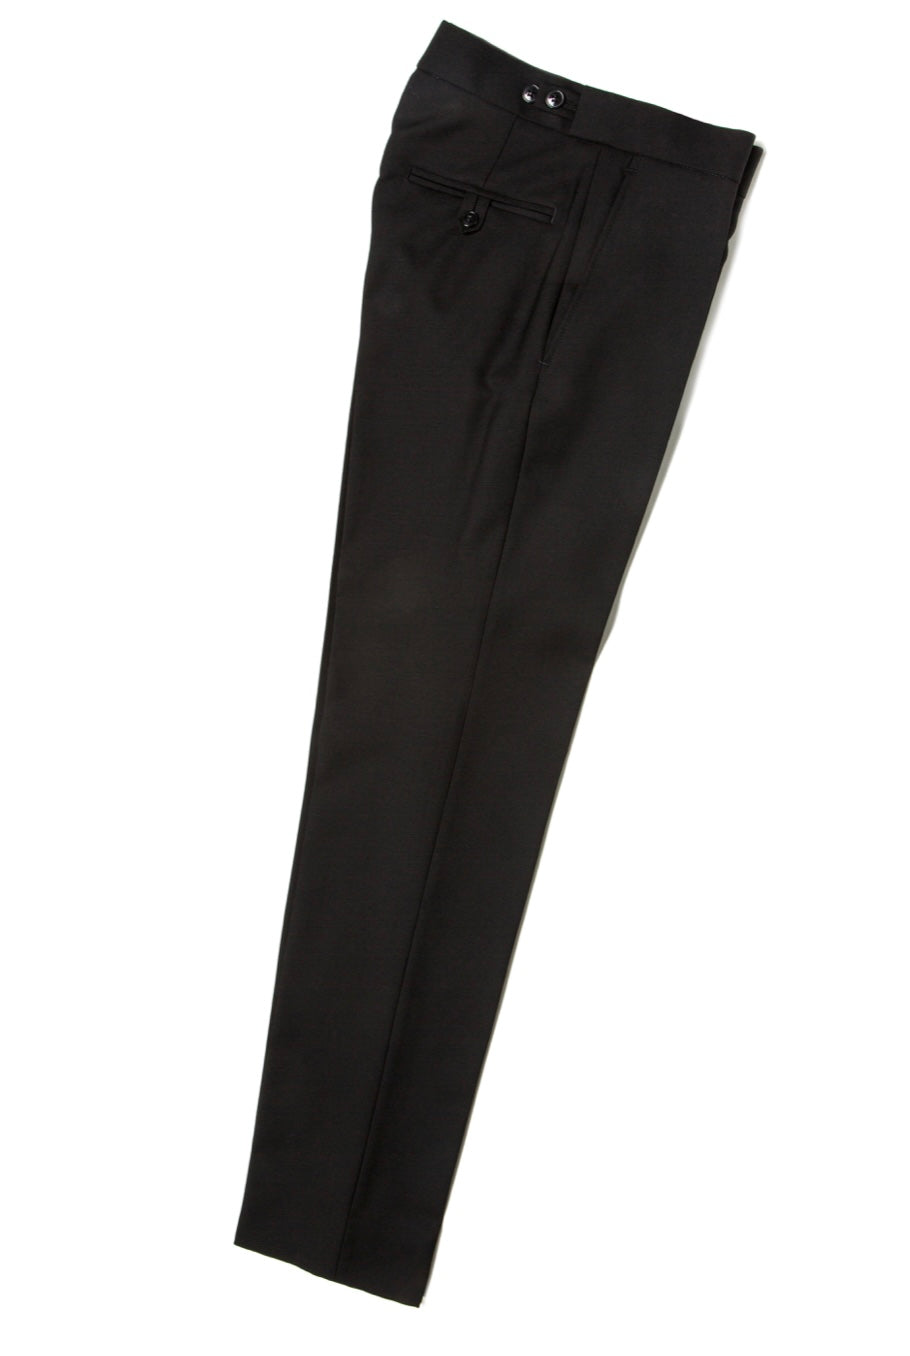 Fuzzdandy Drainpipe Skinny Trousers Jeans Striped Mod Indie White Black 30  Waist x 30 Leg  Amazoncouk Fashion